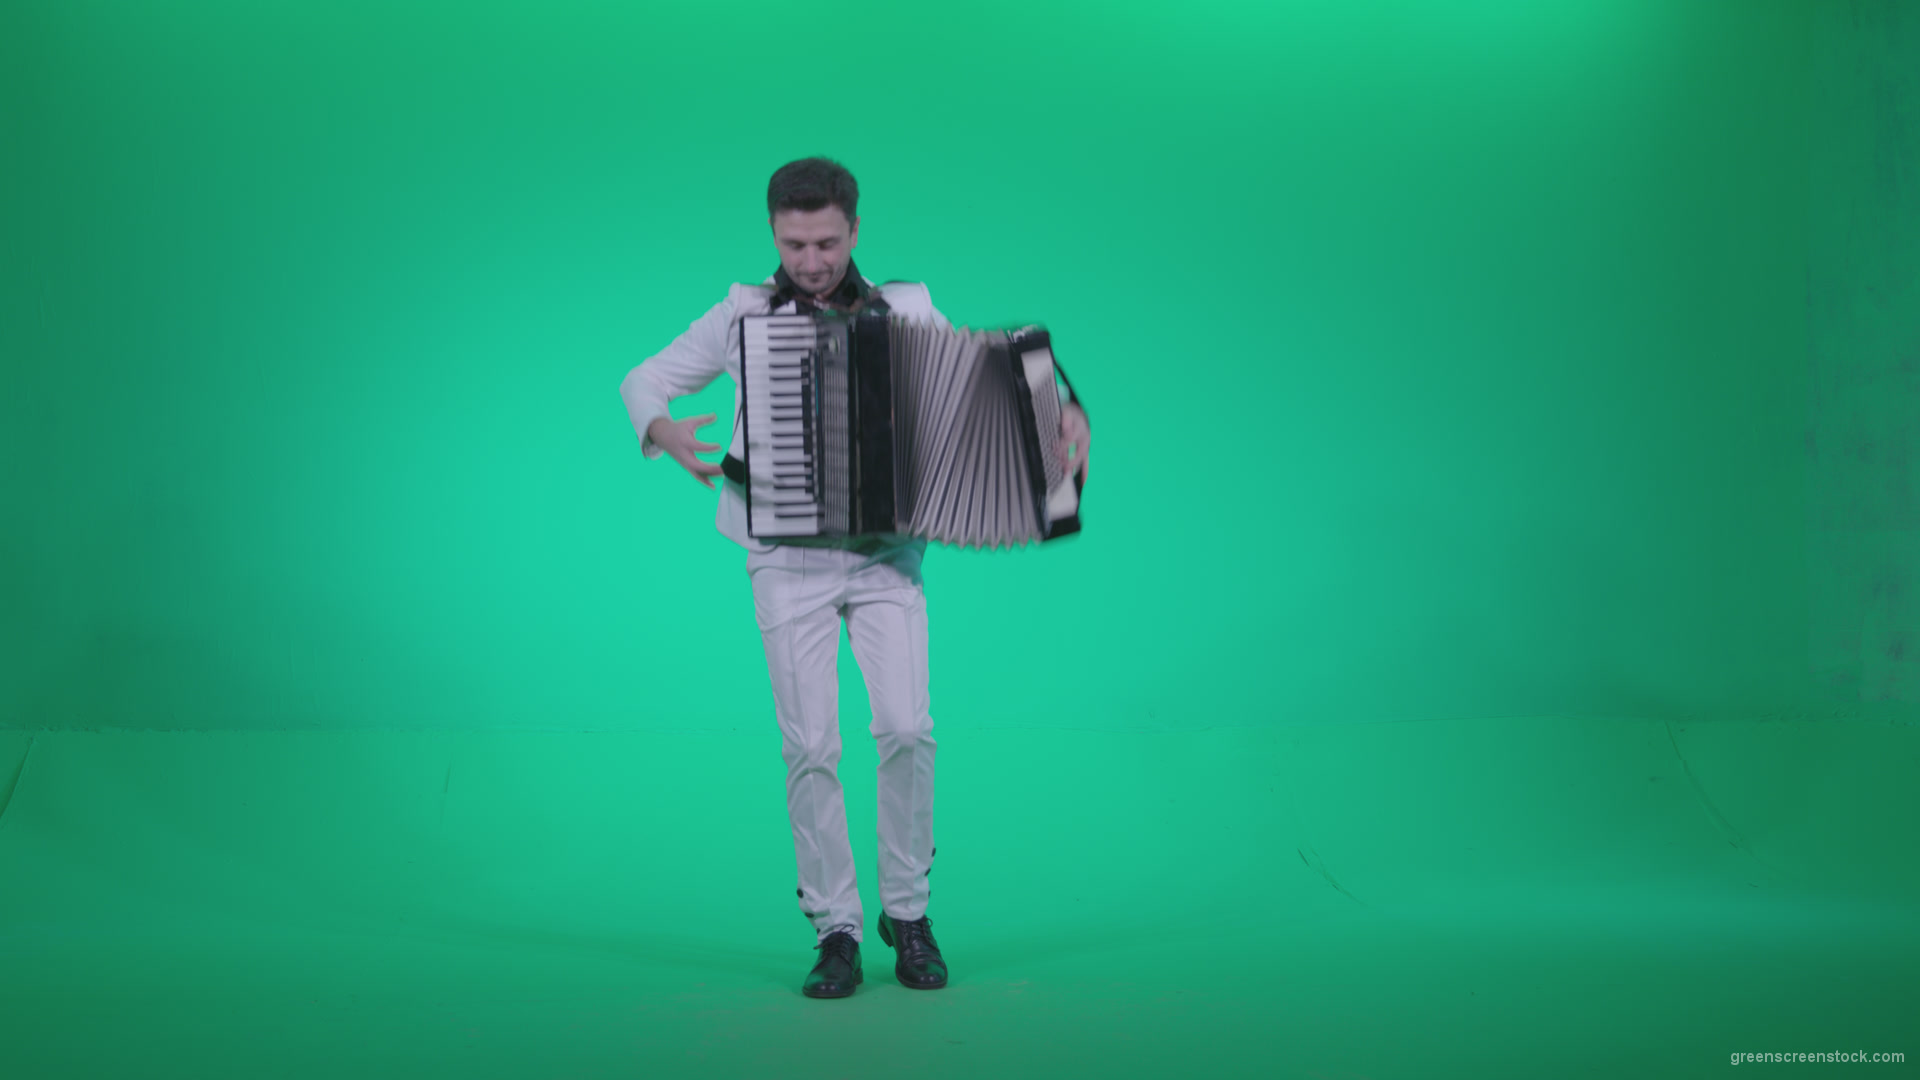 Black-Accordion-Virtuoso-performs-ba9-Green-Screen-Video-Footage_009 Green Screen Stock